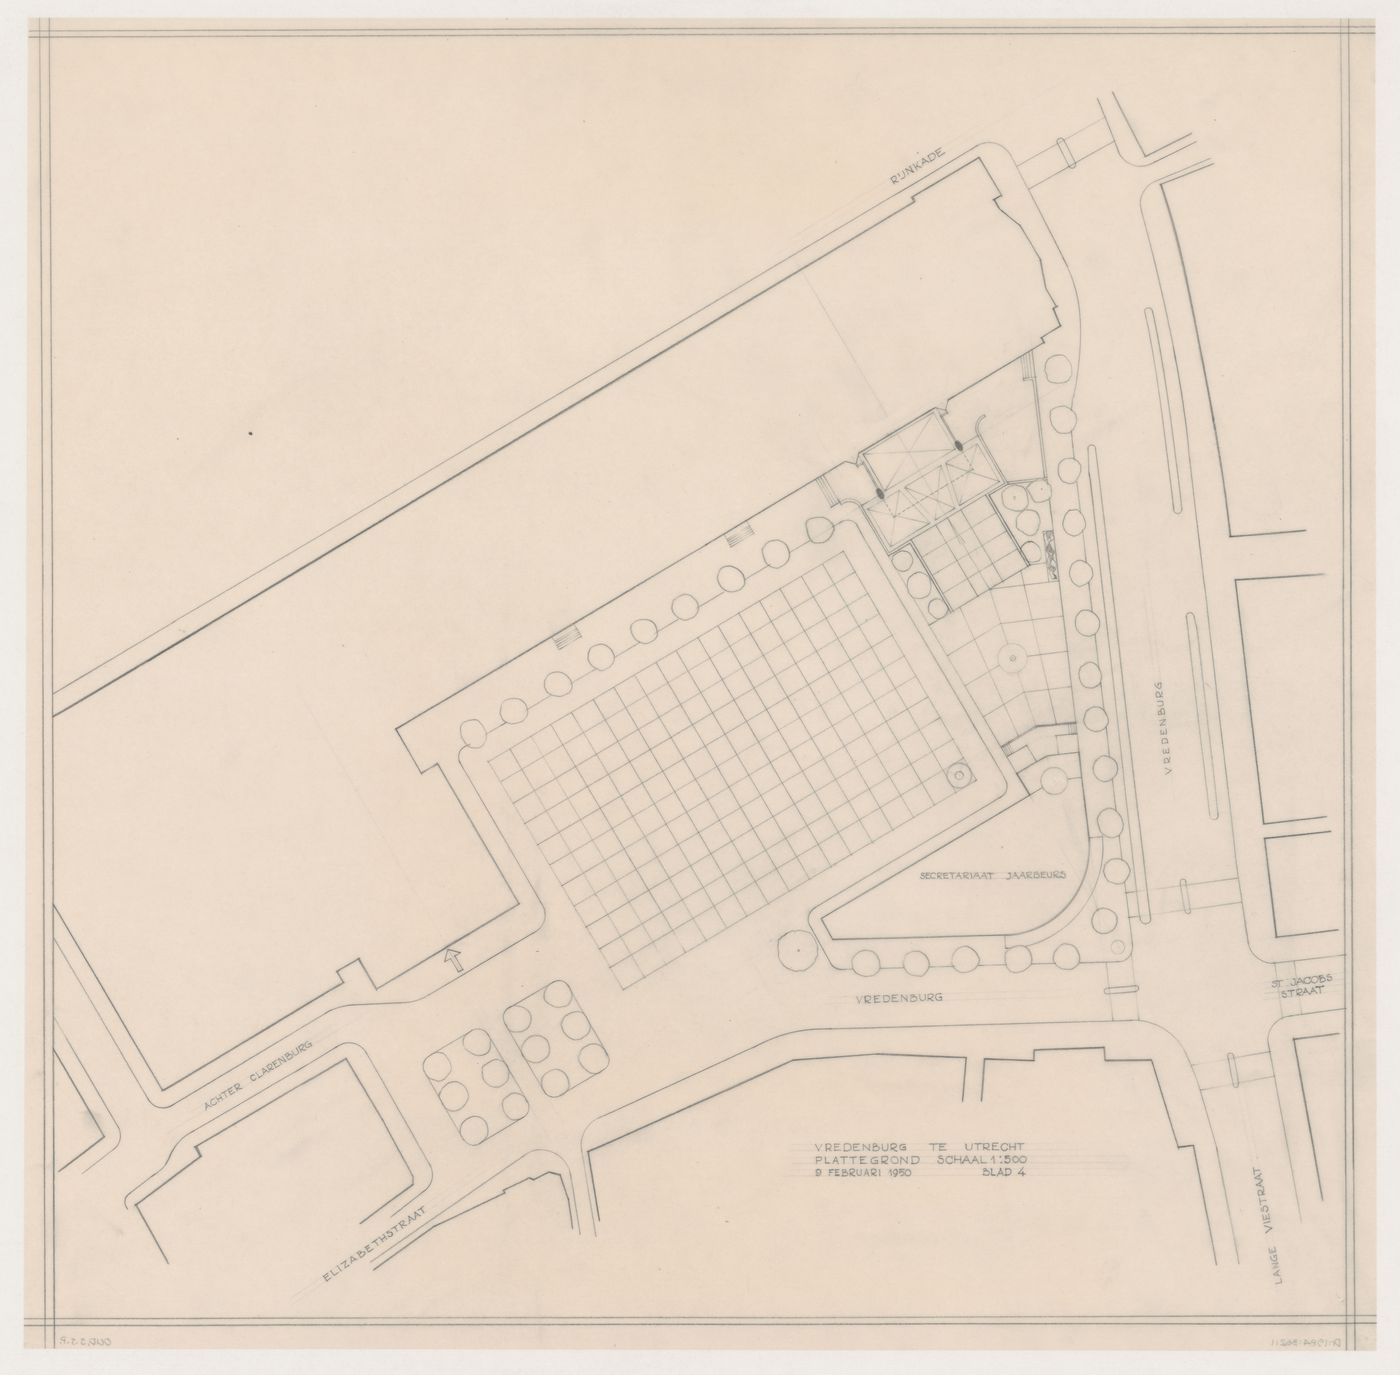 Site plan for Vredenburg mixed-use development, Utrecht, Netherlands